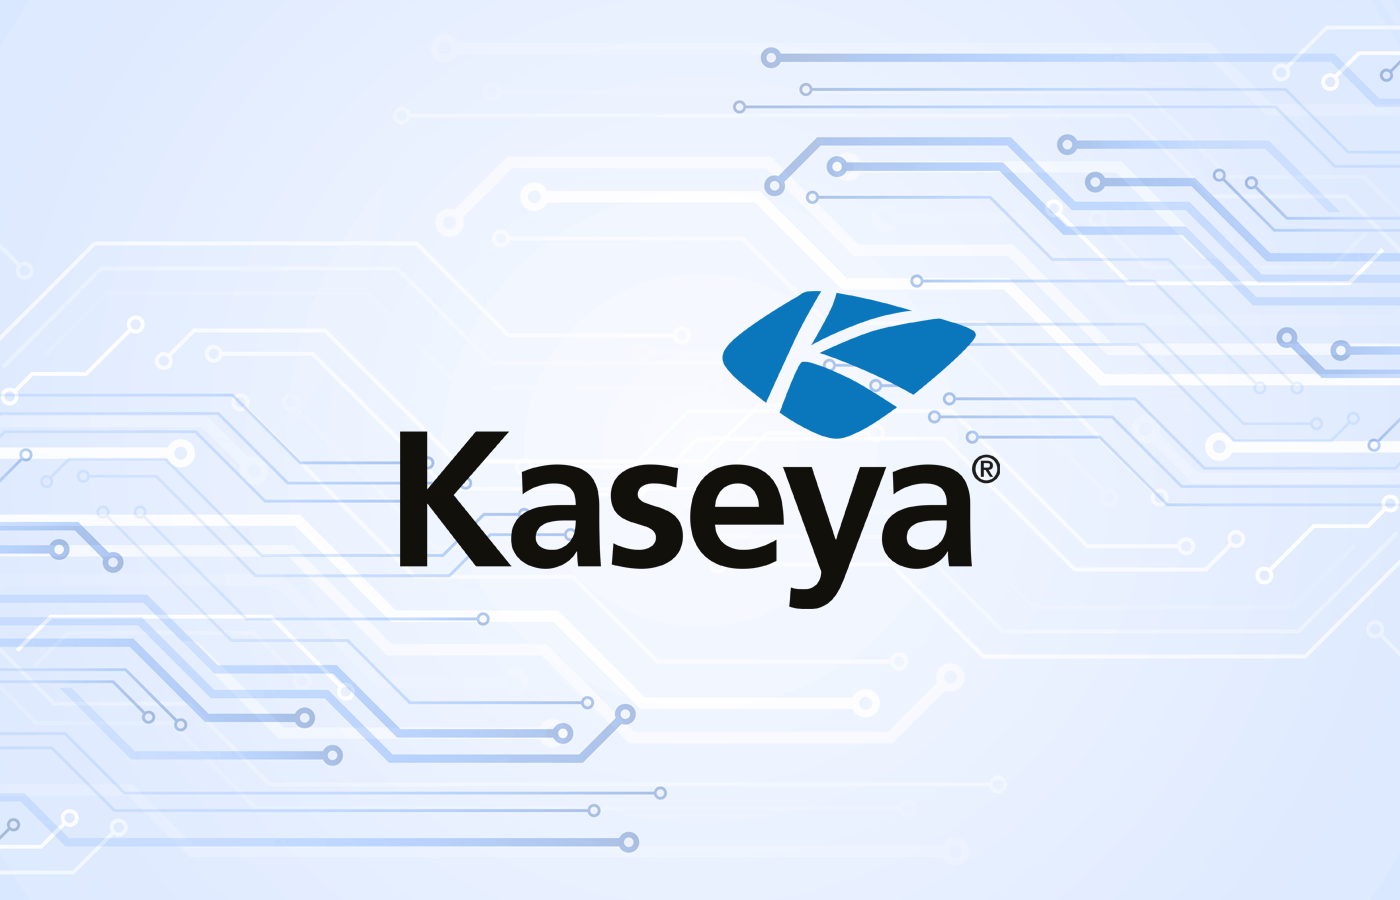 Kaseya Transforms the Economic Landscape for MSPs